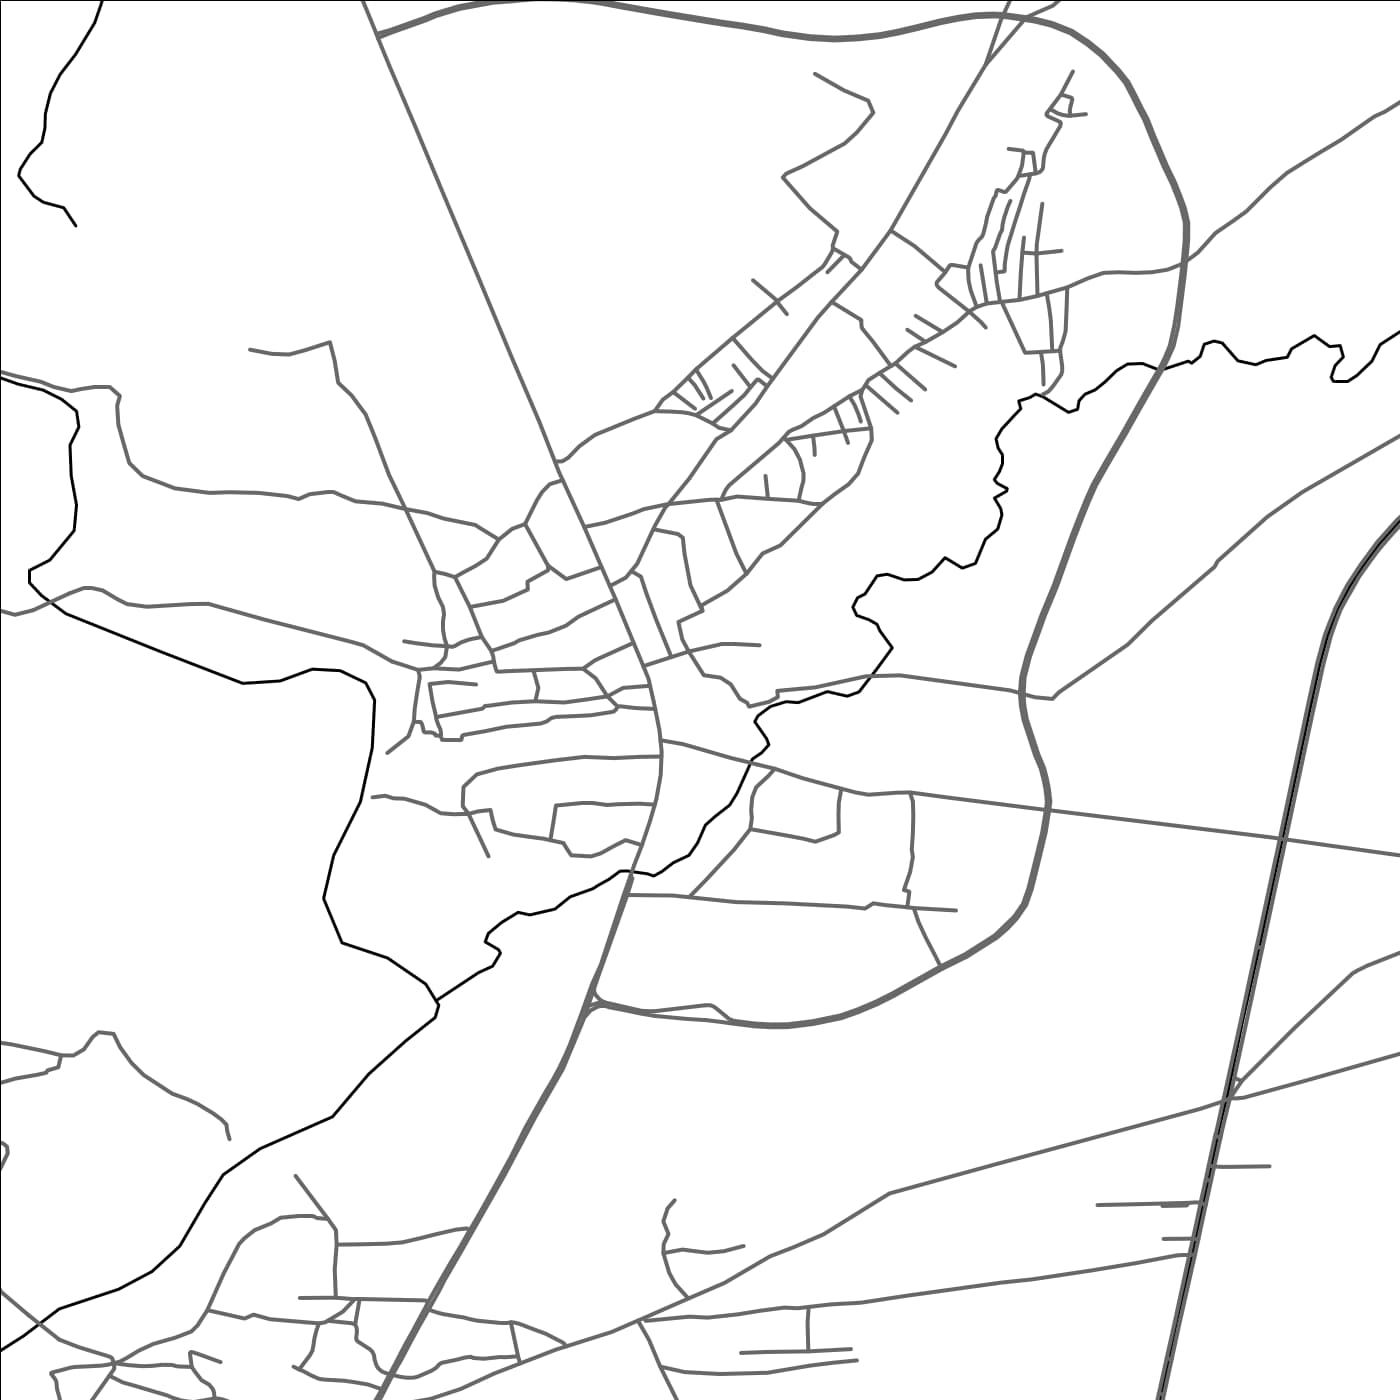 ROAD MAP OF UTMANZAI, PAKISTAN BY MAPBAKES